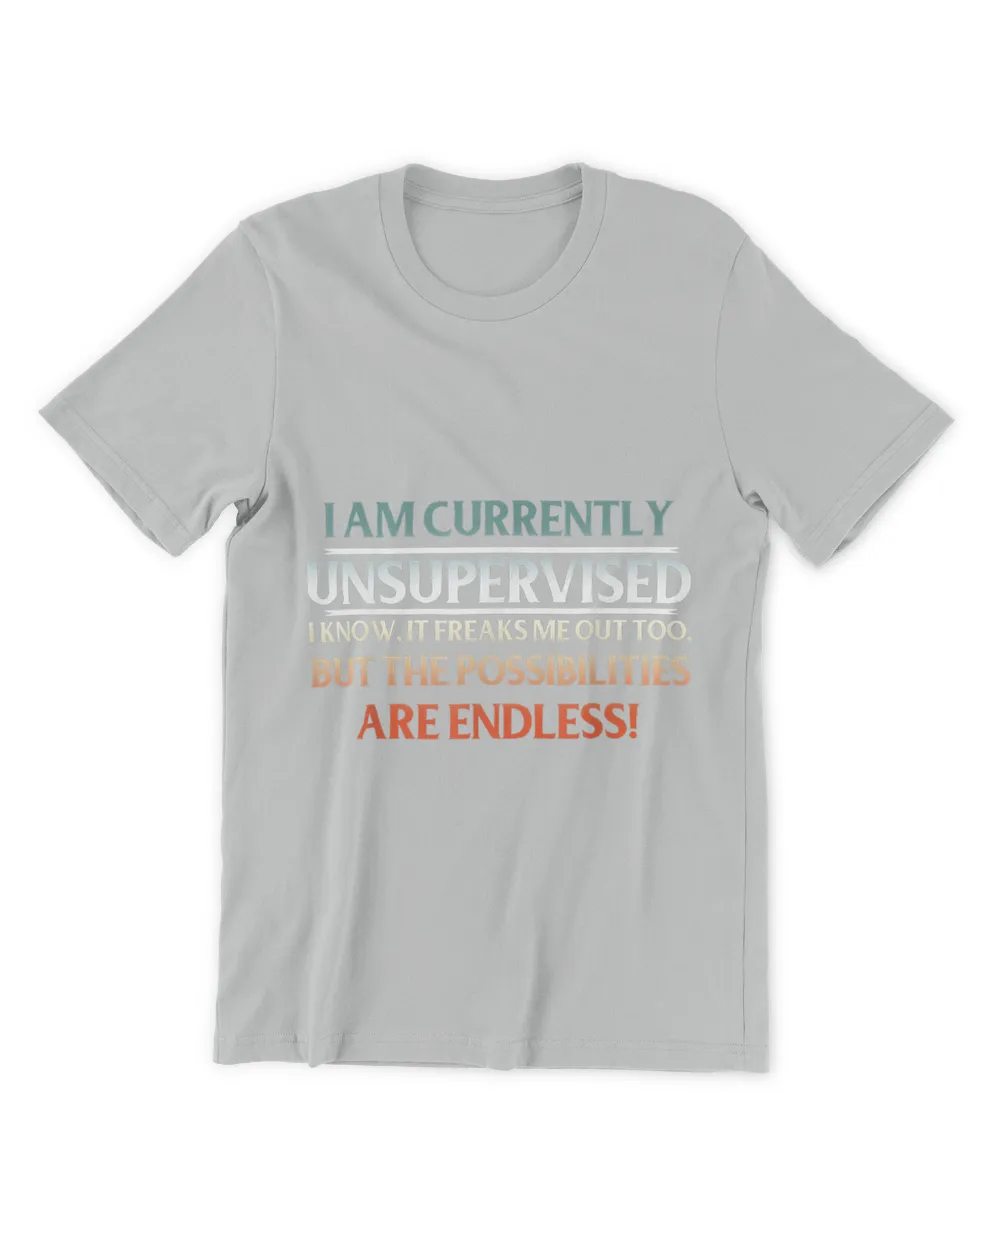 I Am Currently Unsupervised T Shirt Humor Novelty